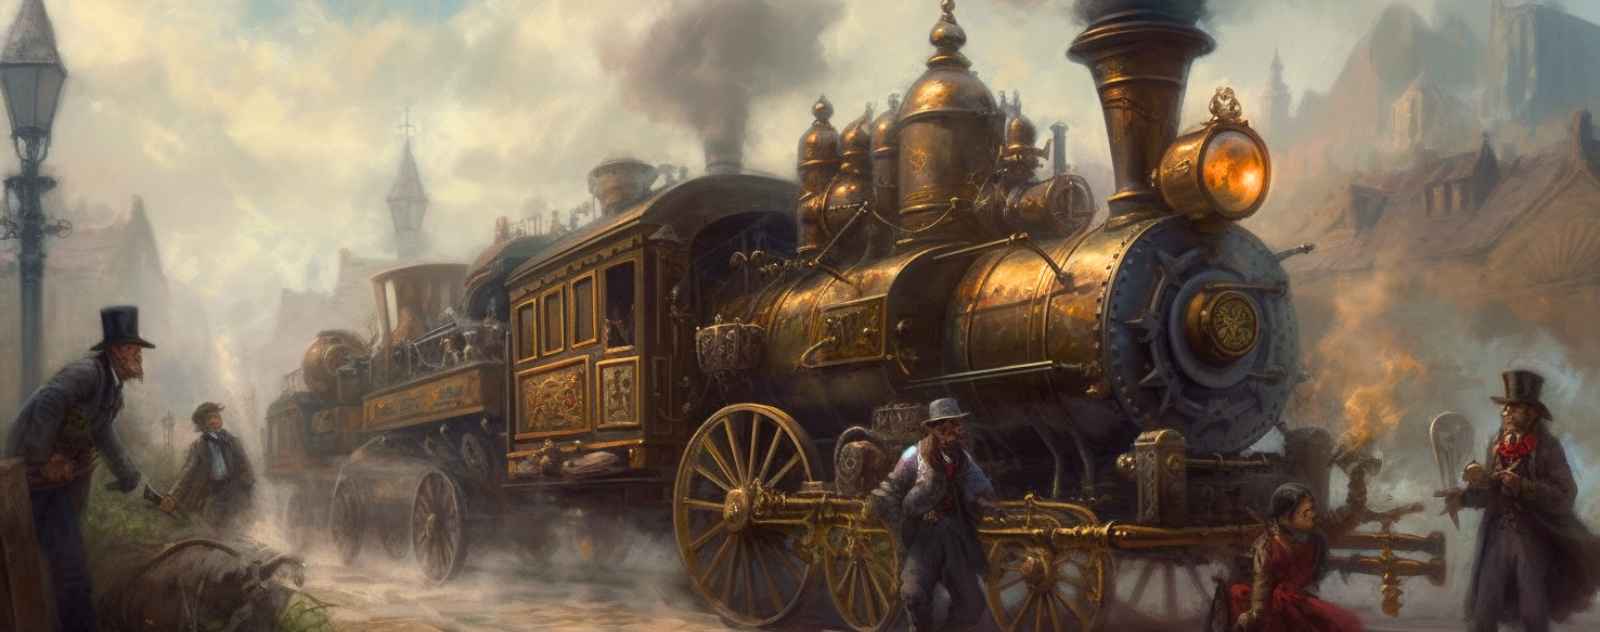 chemin de fer steampunk